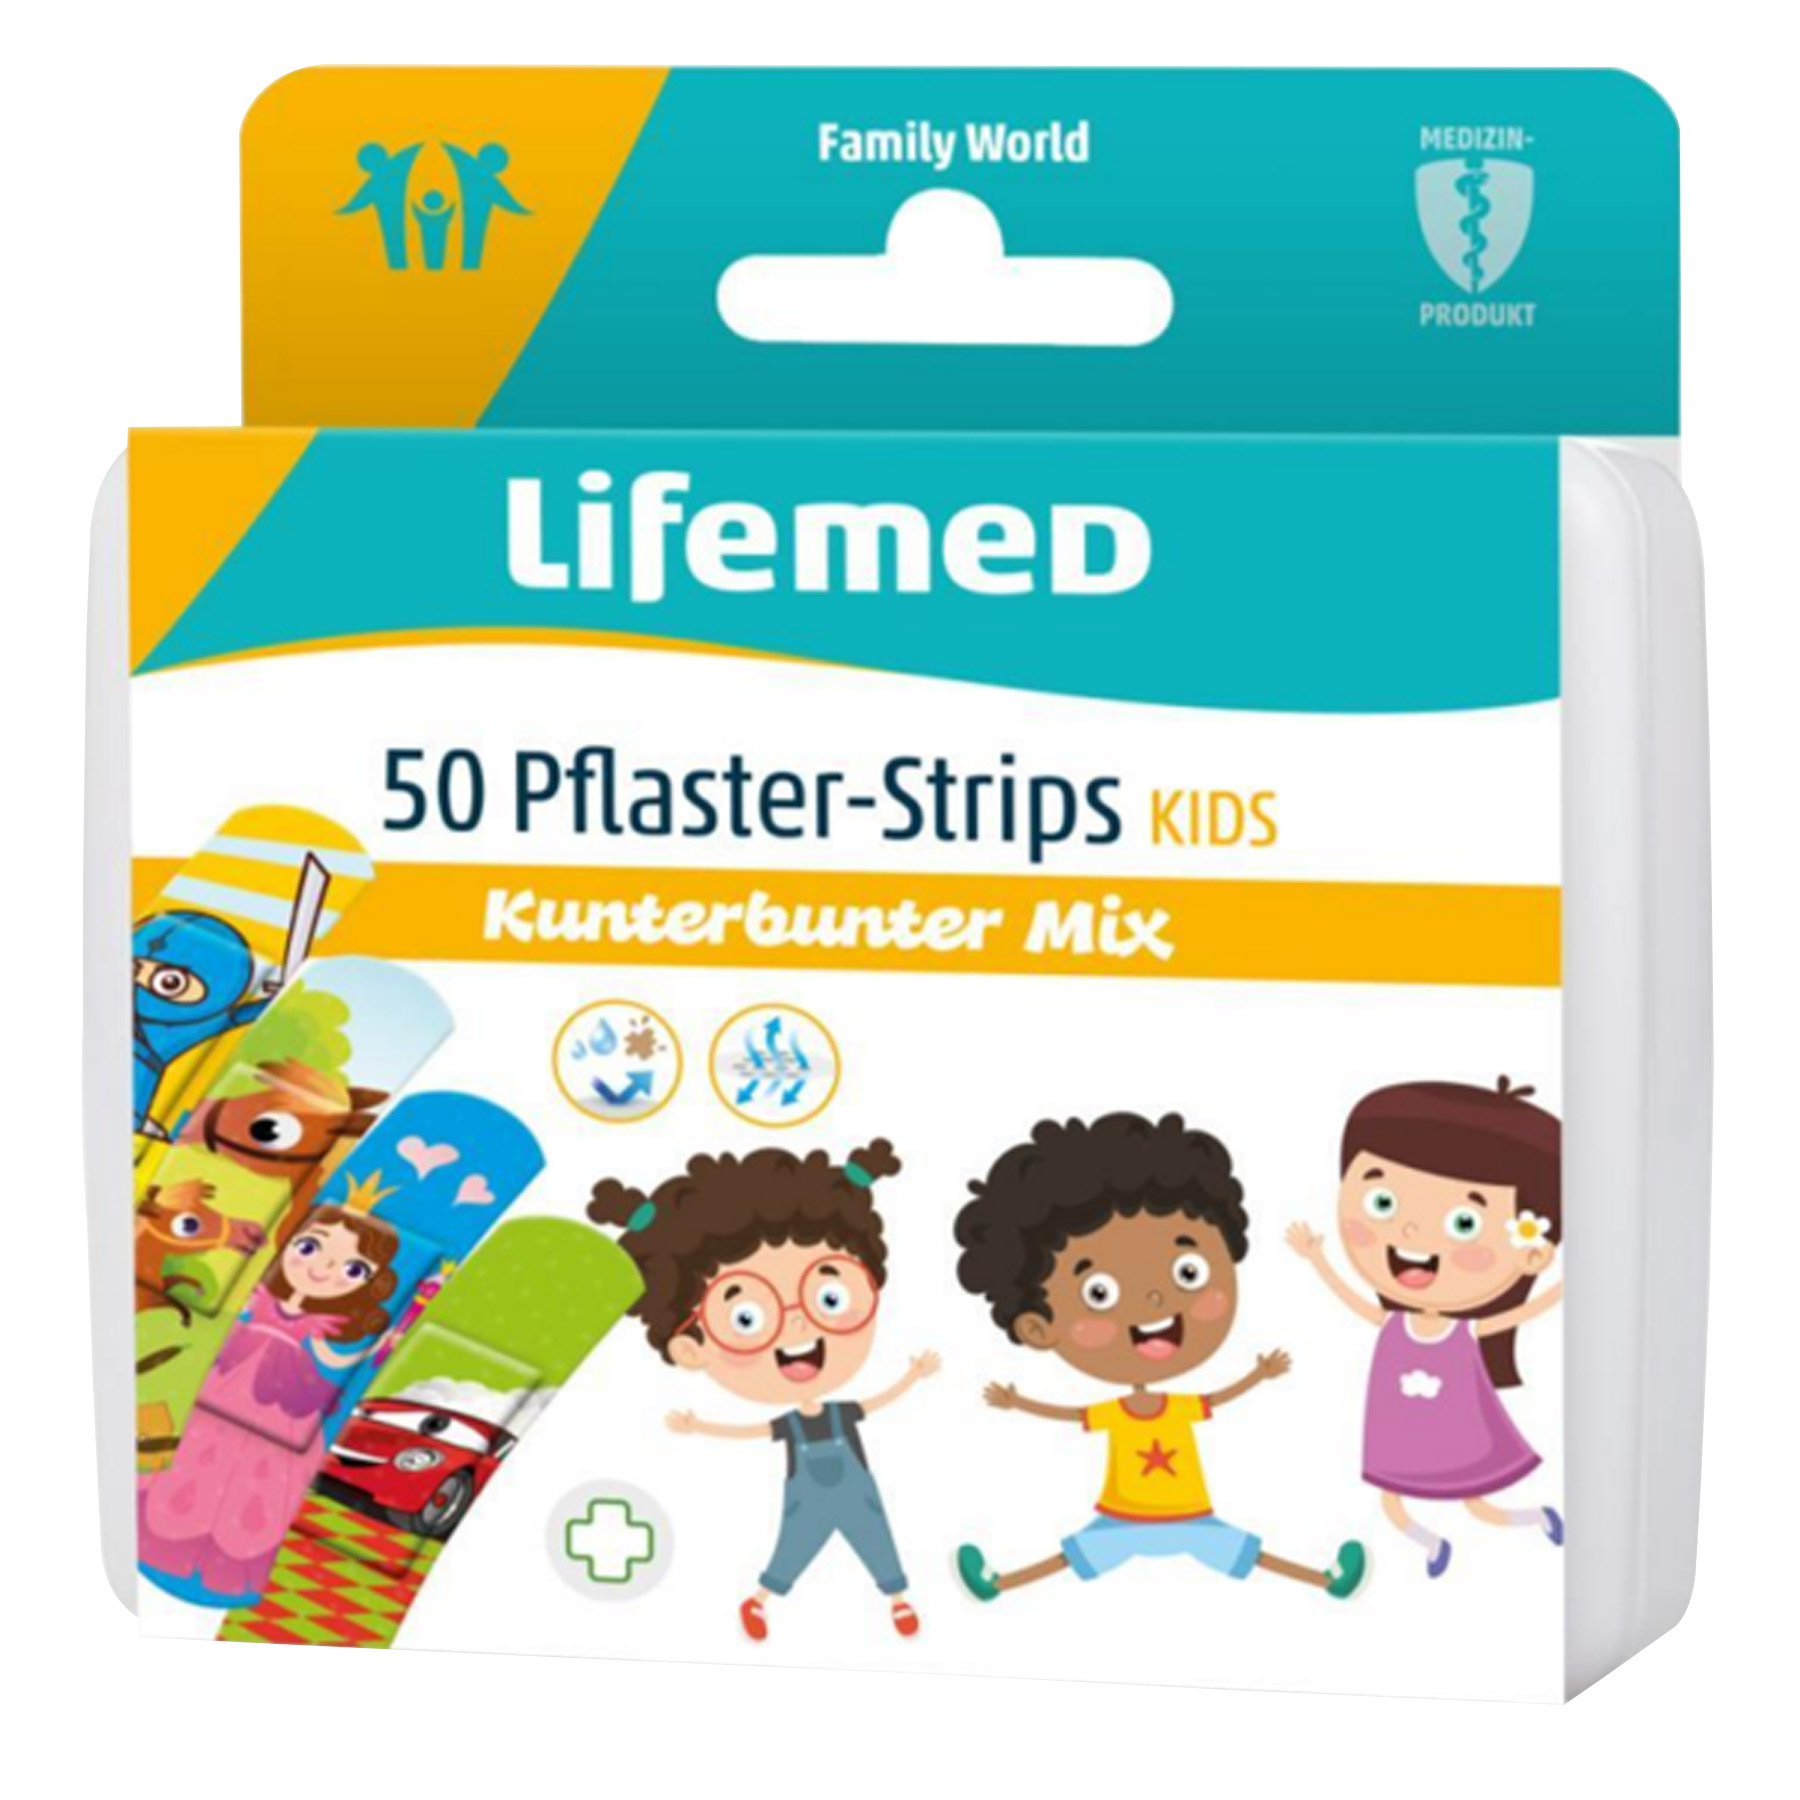 50 Lifemed KIDS-Pflaster-Strips 6 x 1,7 cm Kunterbunter Mix